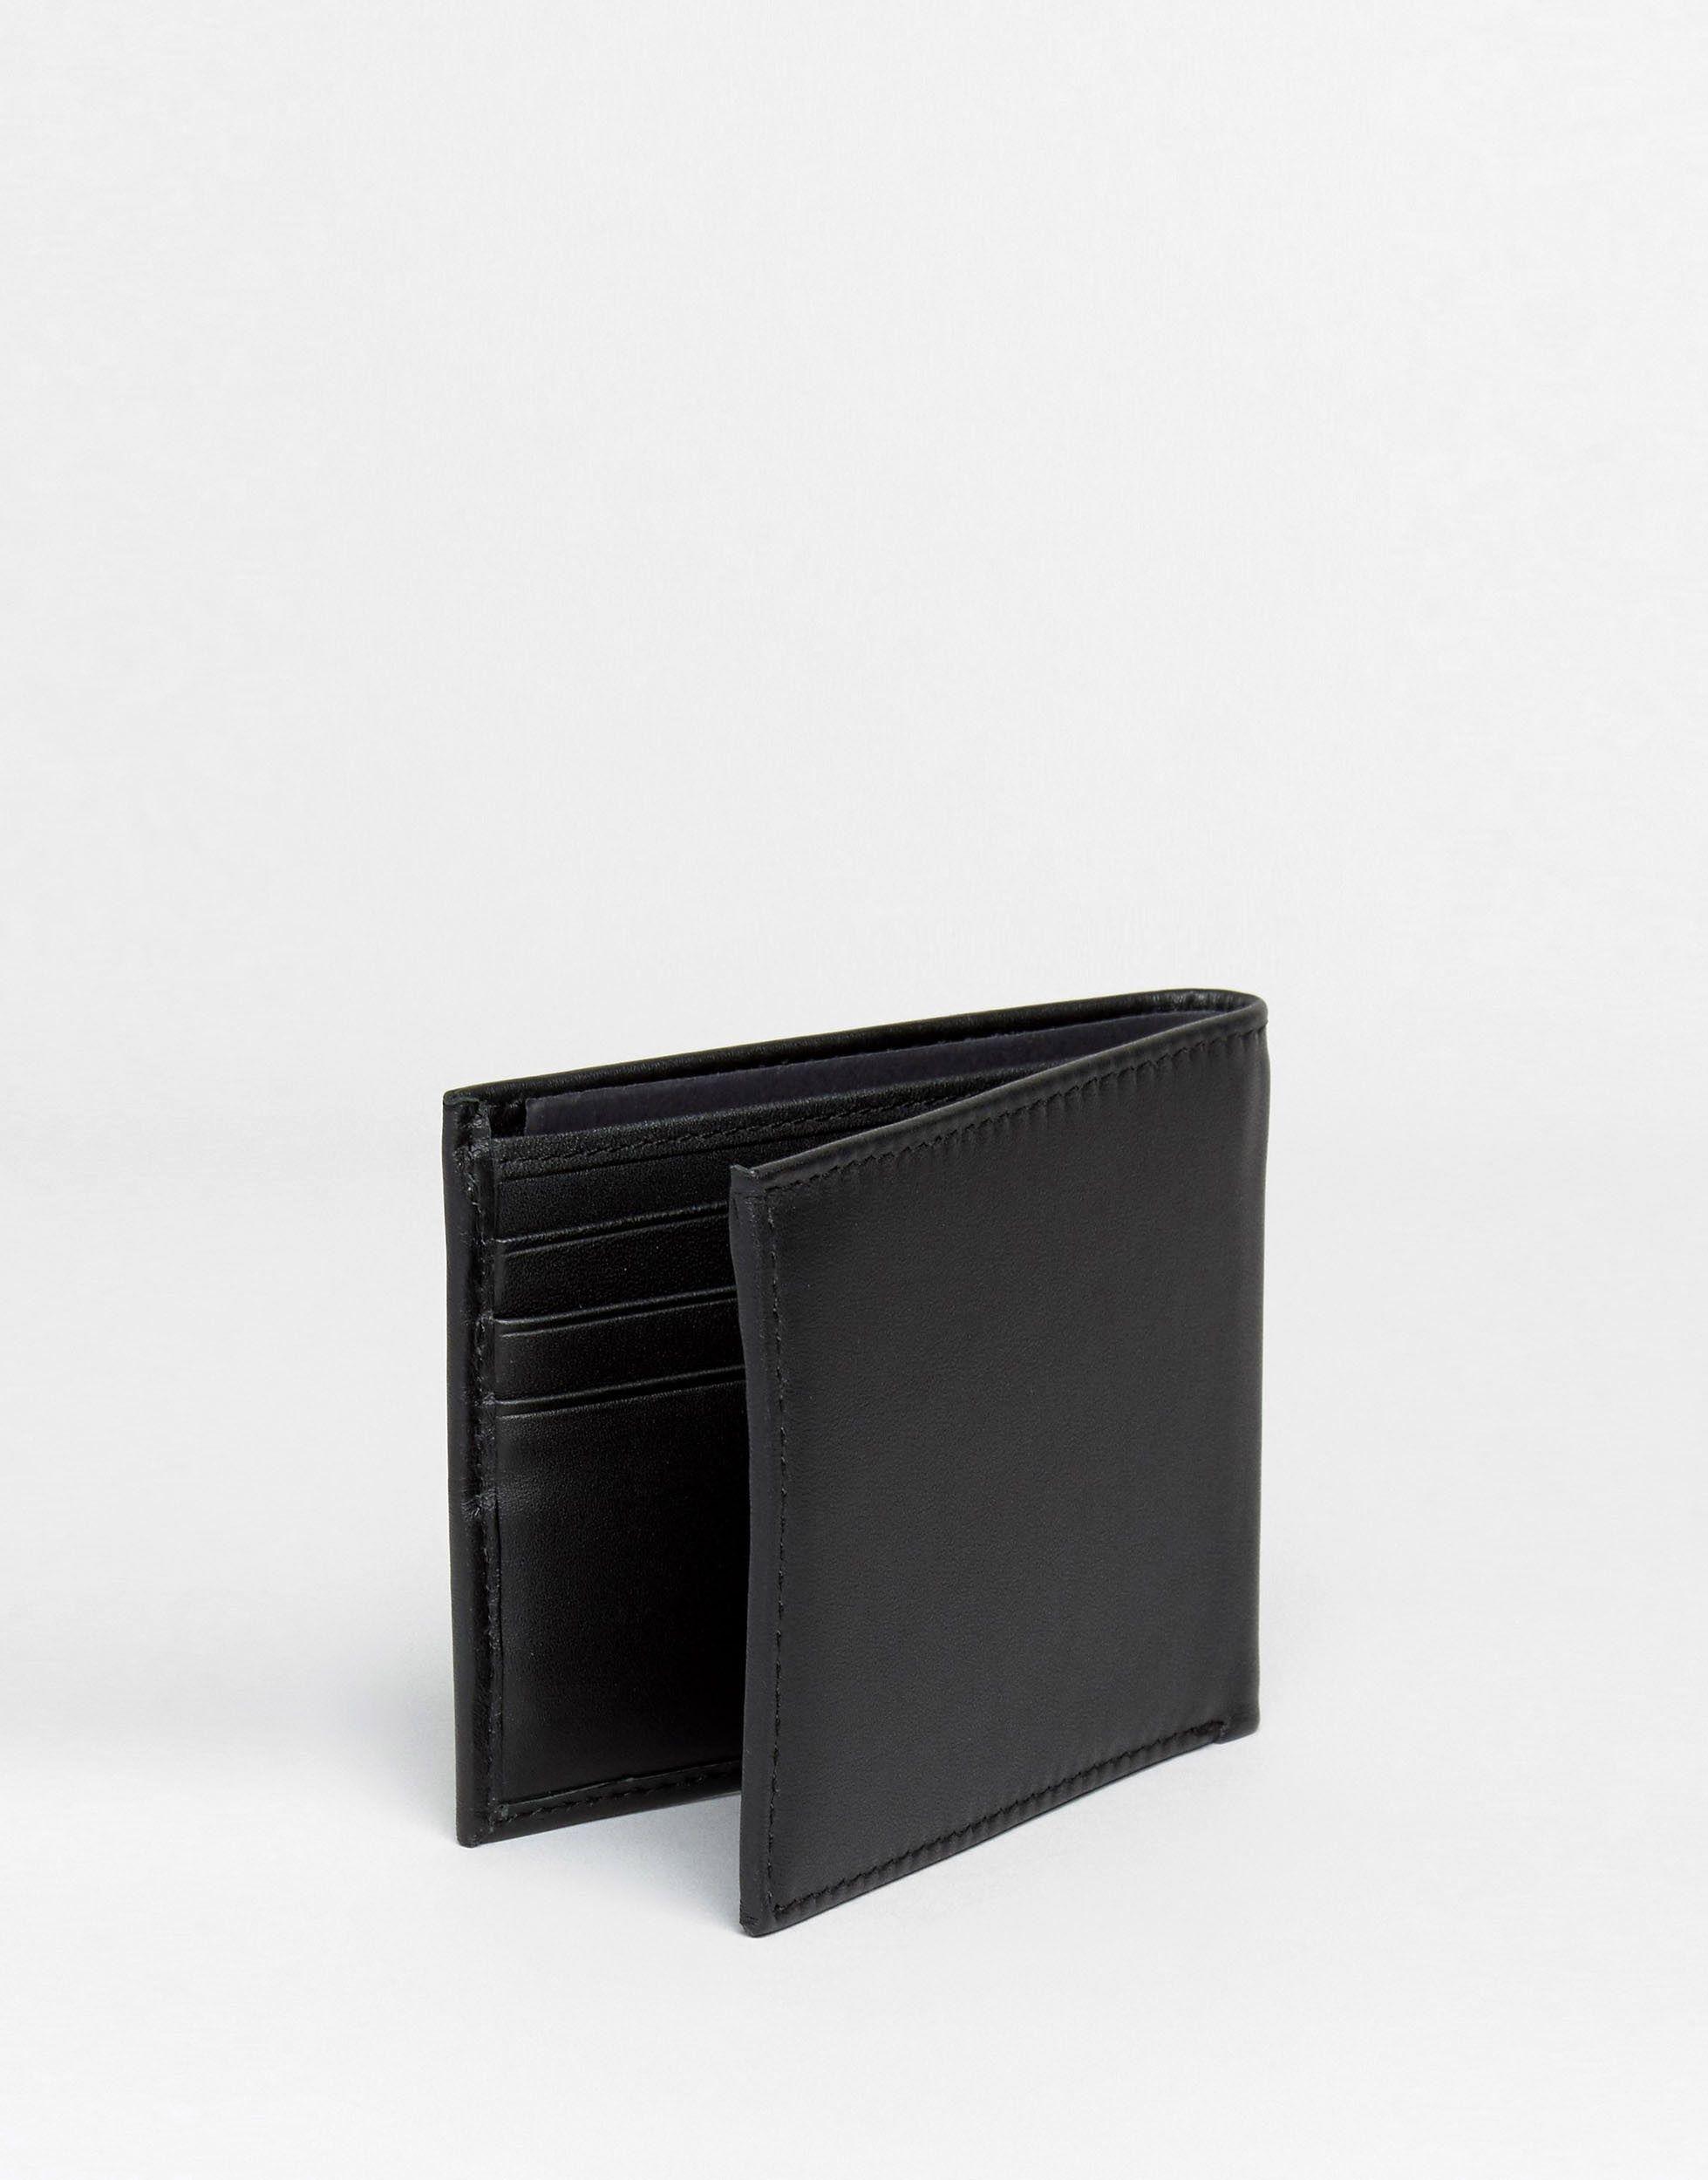 Tommy Hilfiger Eton Mini Billfold Leather Wallet in Black for Men - Lyst